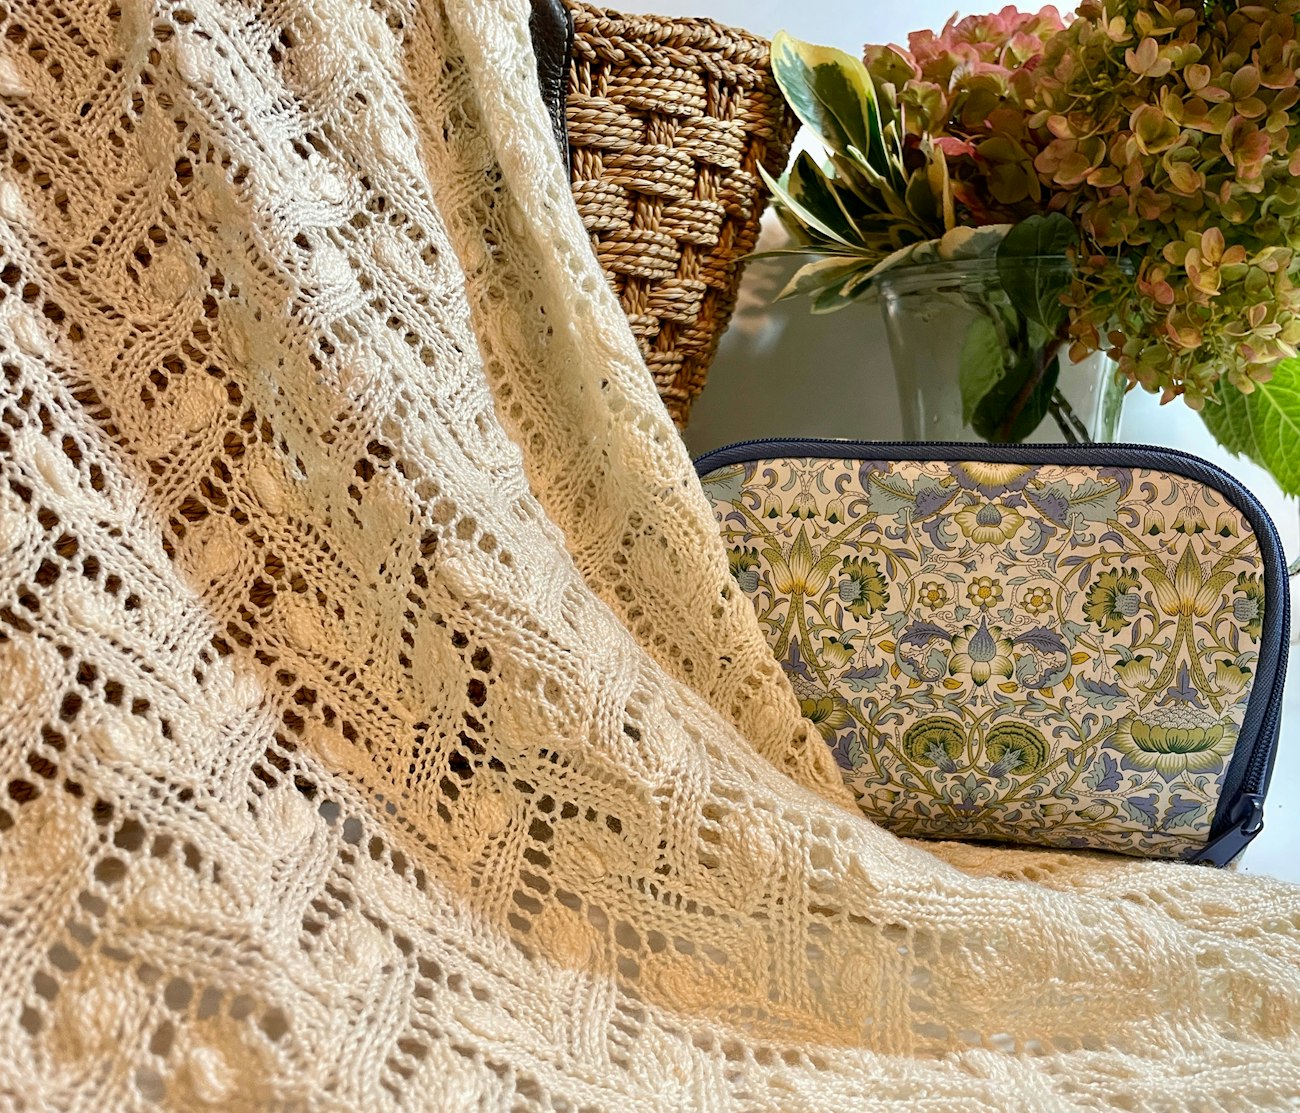 An Estonian shawl in progress from Knitted Lace of Estonia by Nancy Bush. Photo by Pat Olski